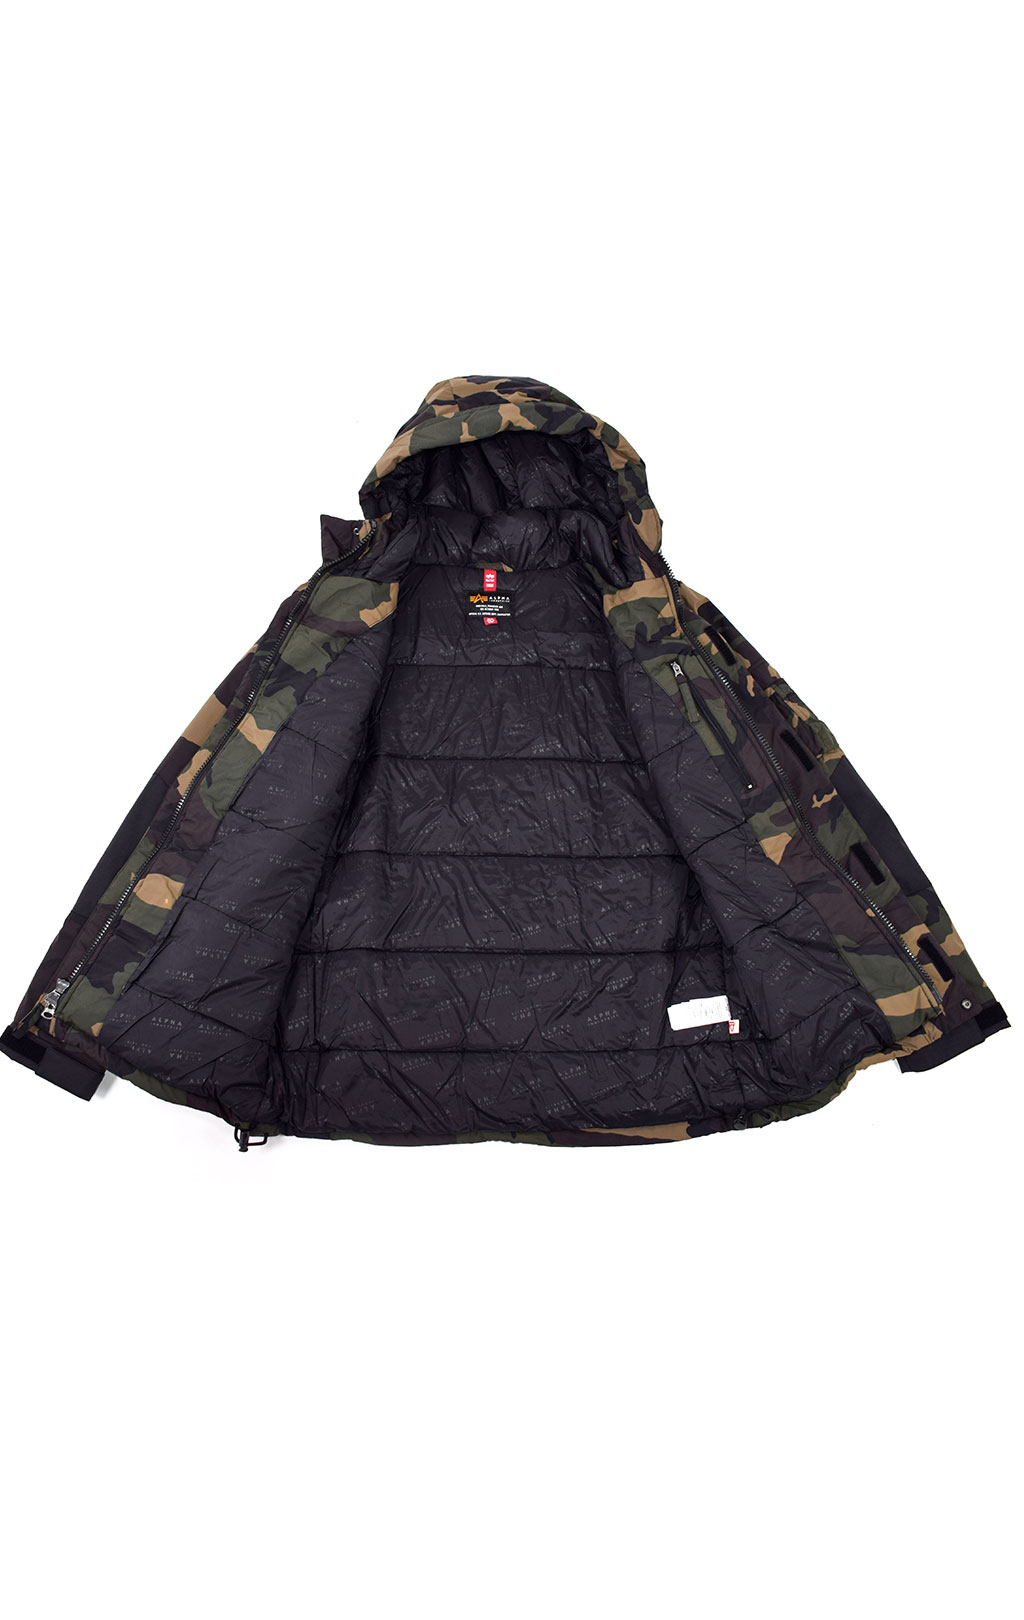 Куртка ALPHA INDUSTRIES AVALANCE PRIMALOFT dark camo woodland 